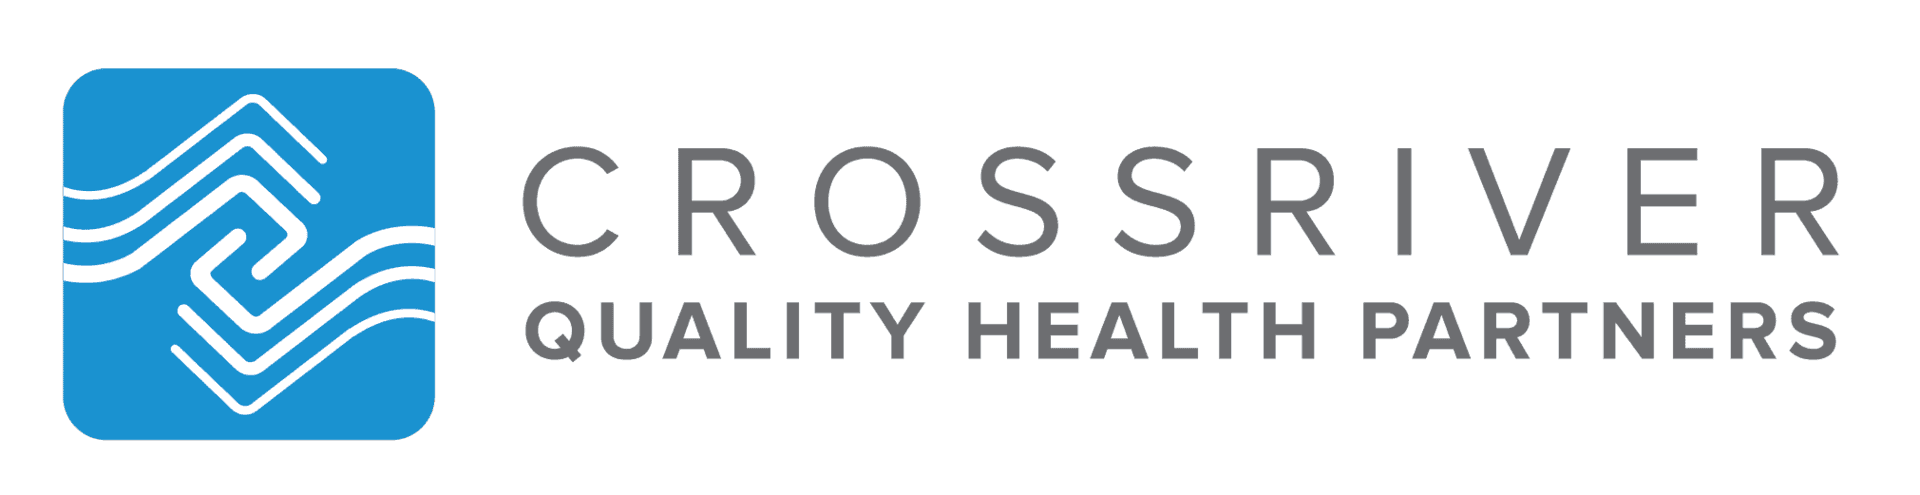 cross river quality health partners logo